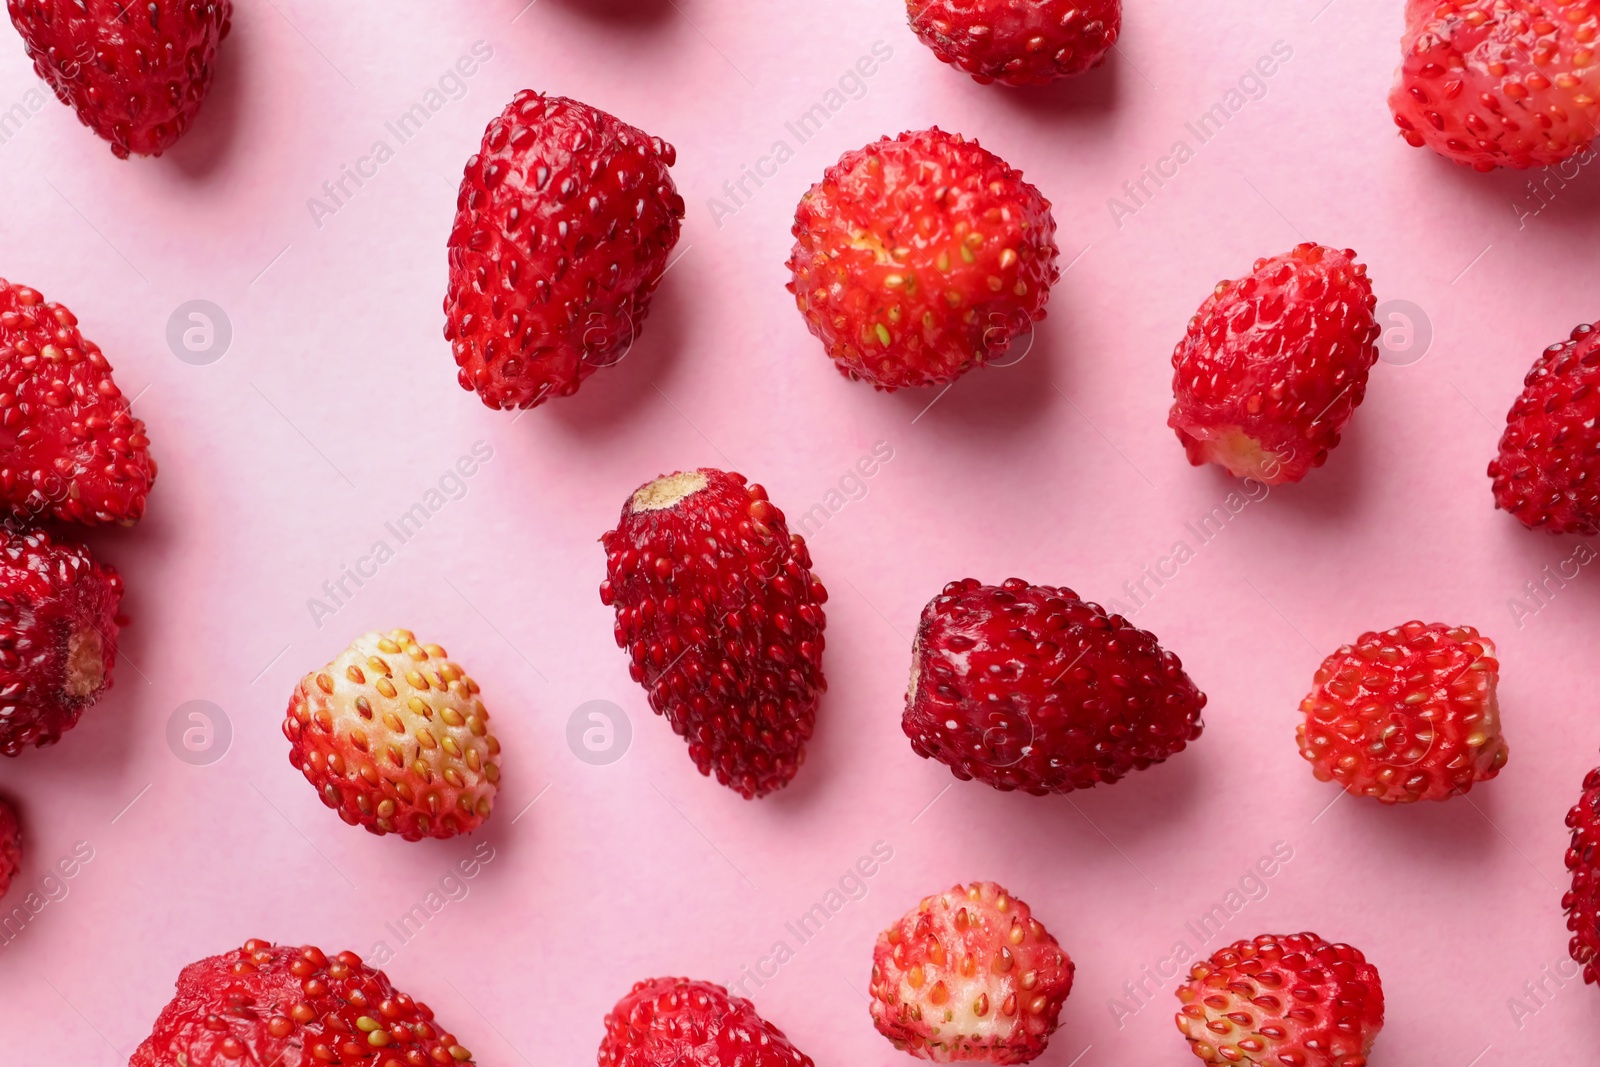 Photo of Many fresh wild strawberries on pink background, flat lay